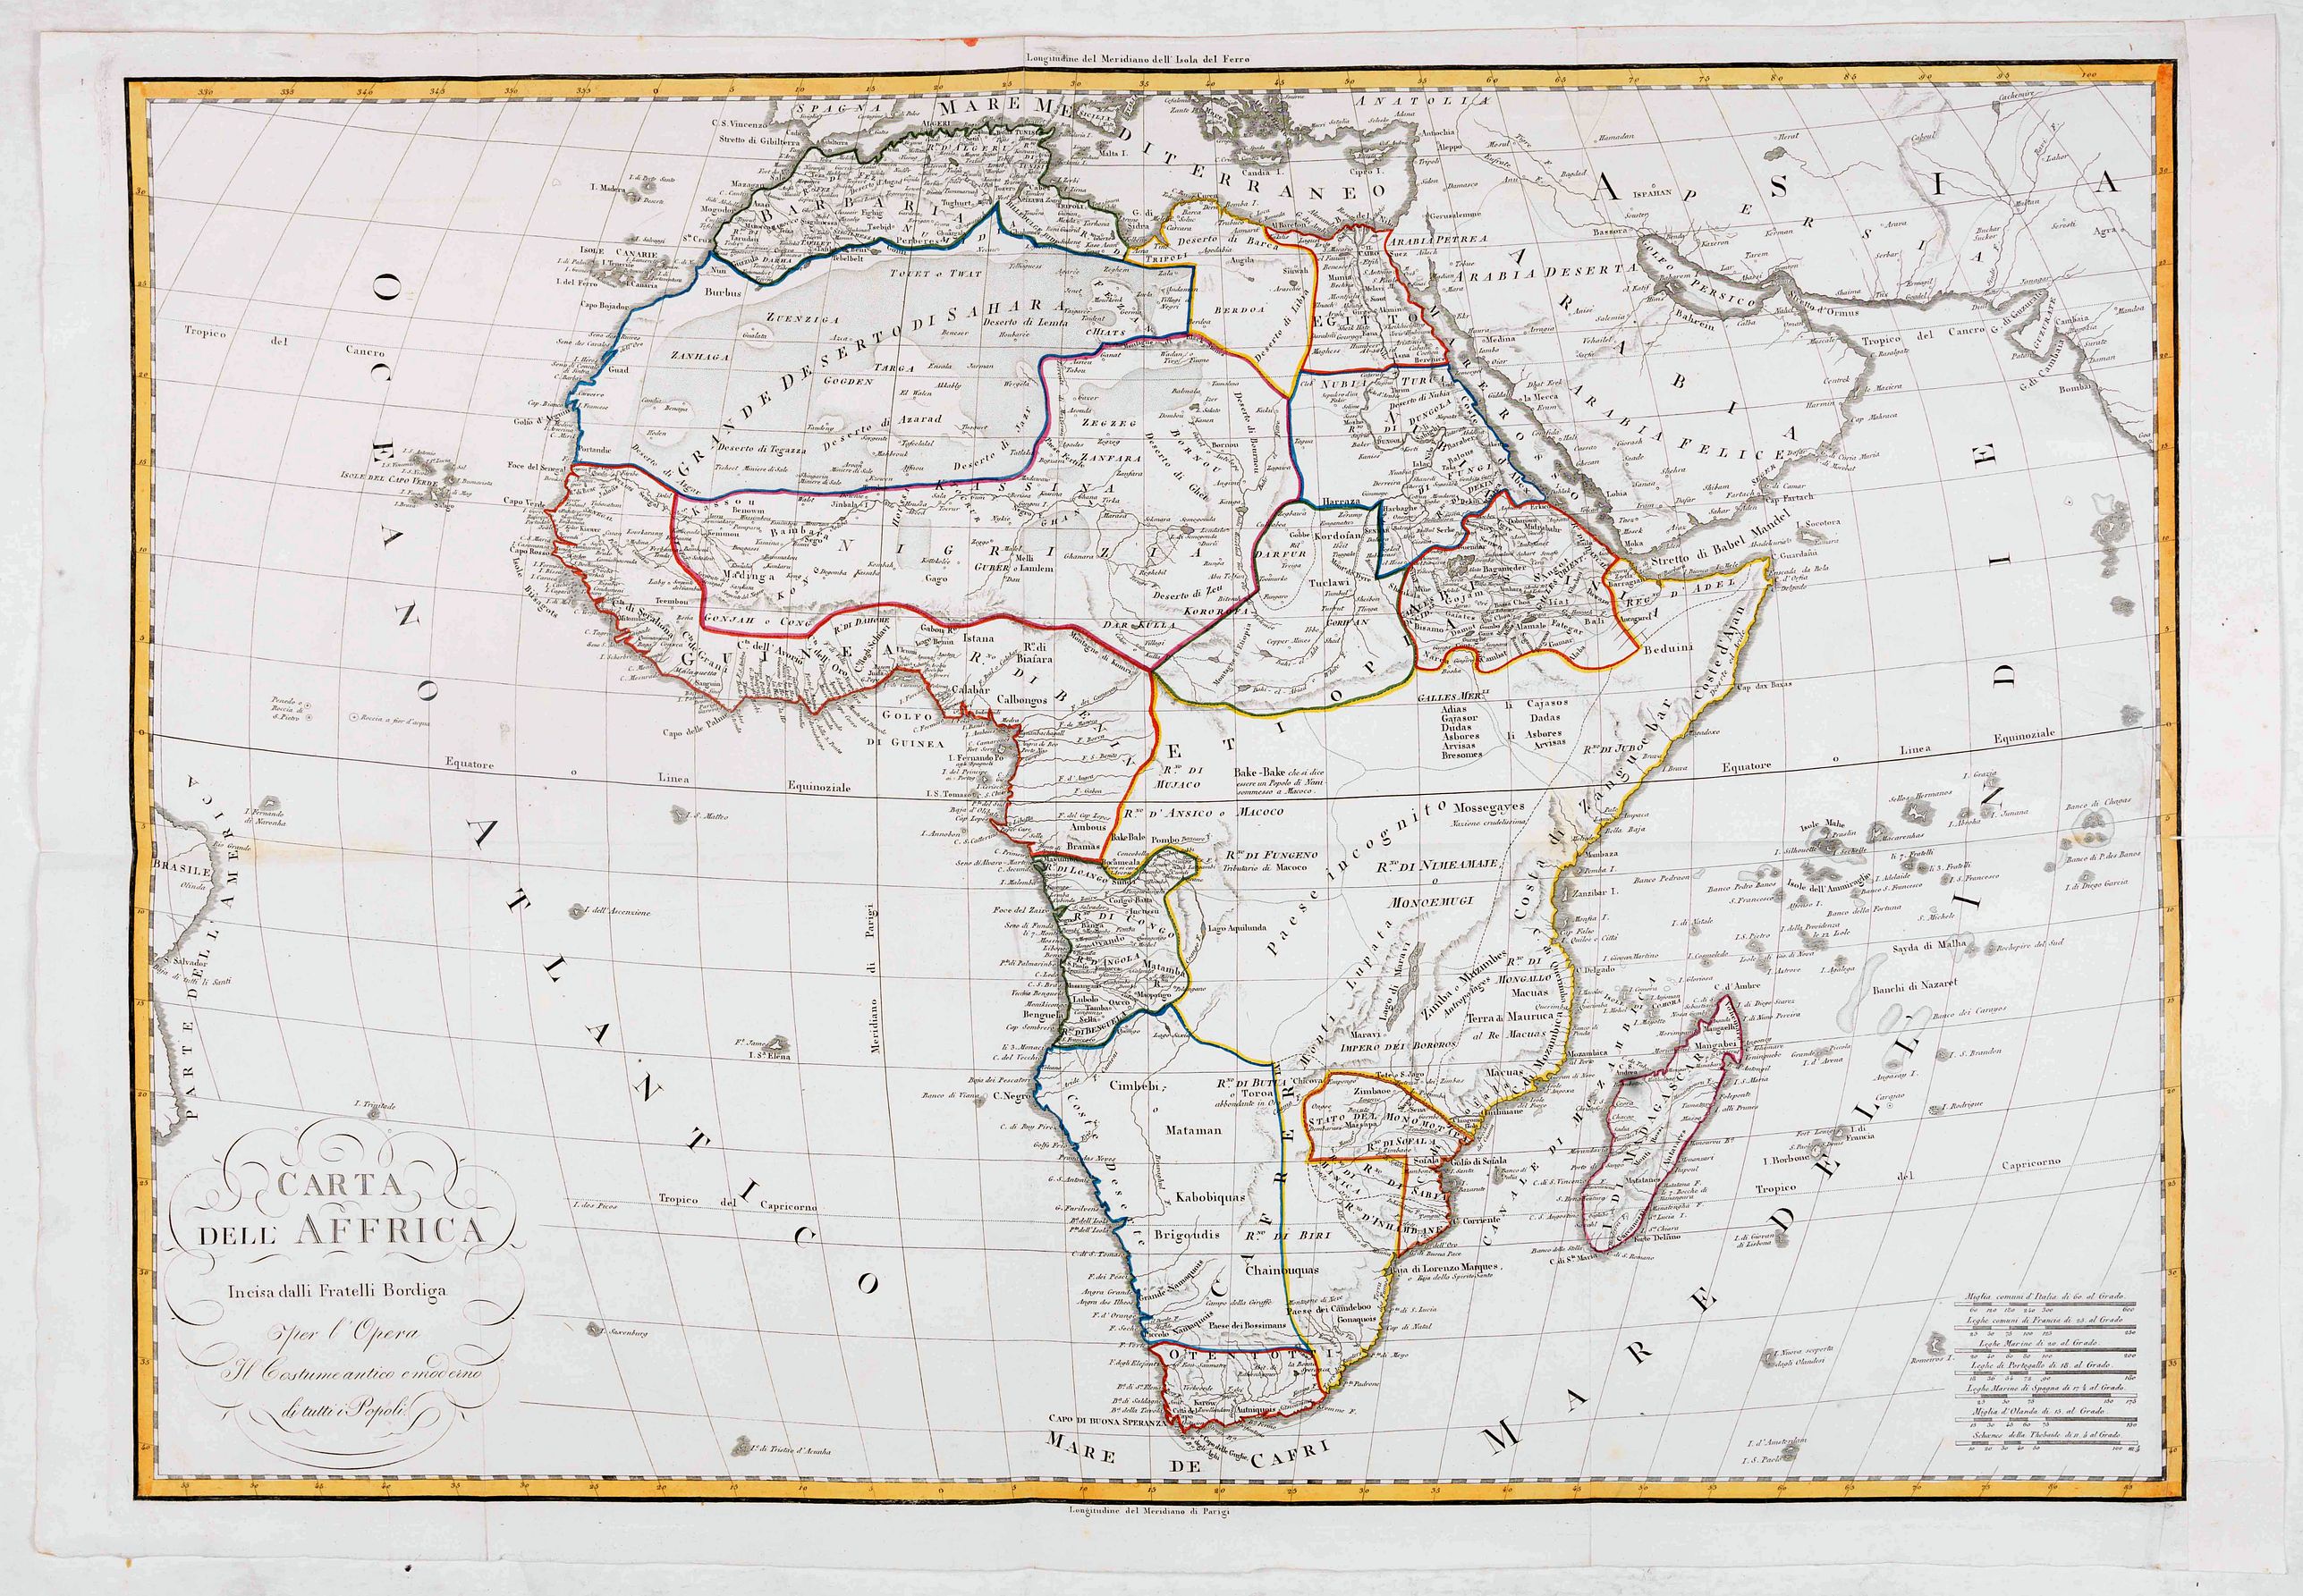 Carta dell Affrica in eisa dalli Fratelli Bordiga.